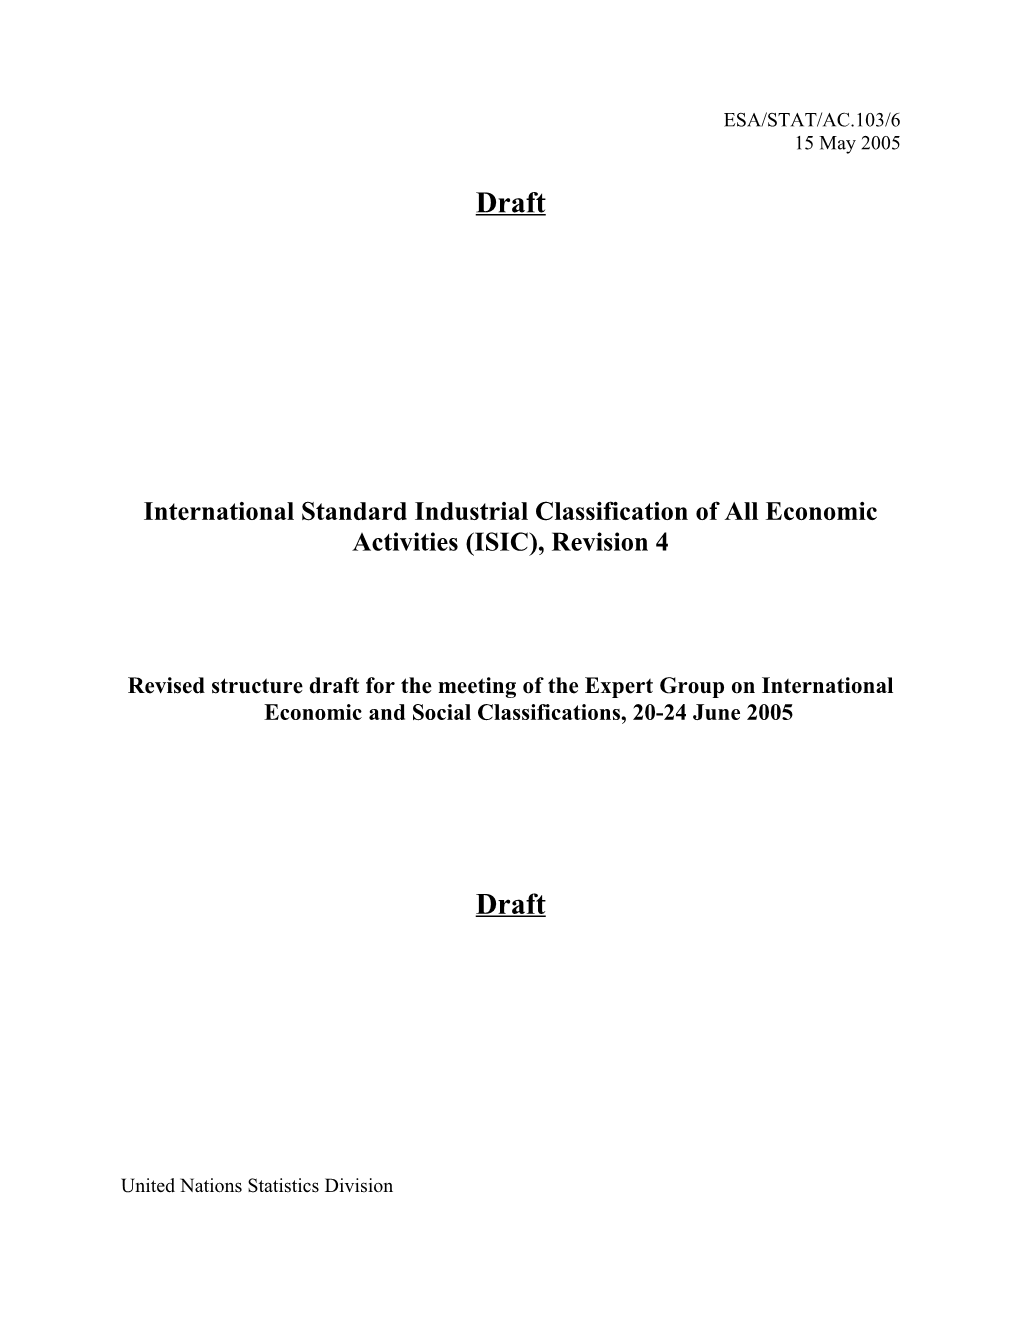 International Standard Industrial Classification of All Economic Activities (ISIC), Rev.4